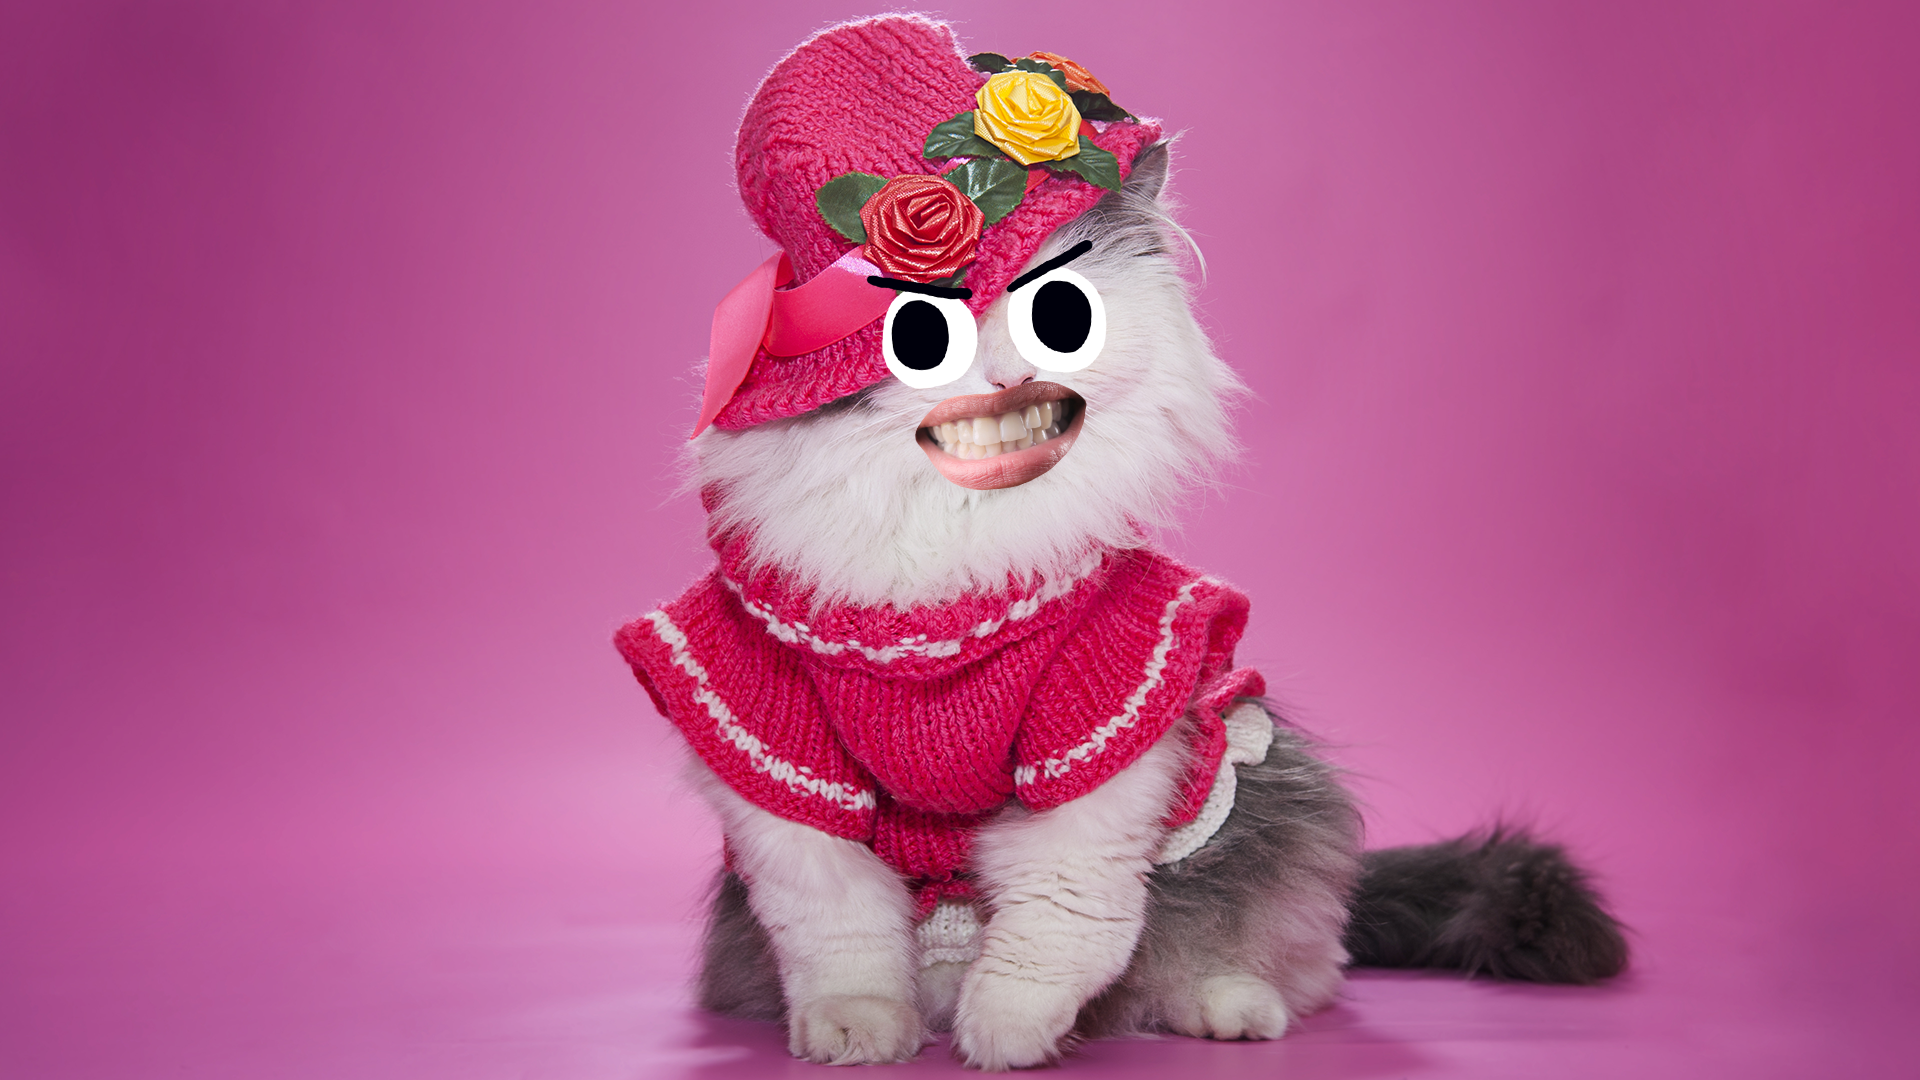 A cat dressed in pink